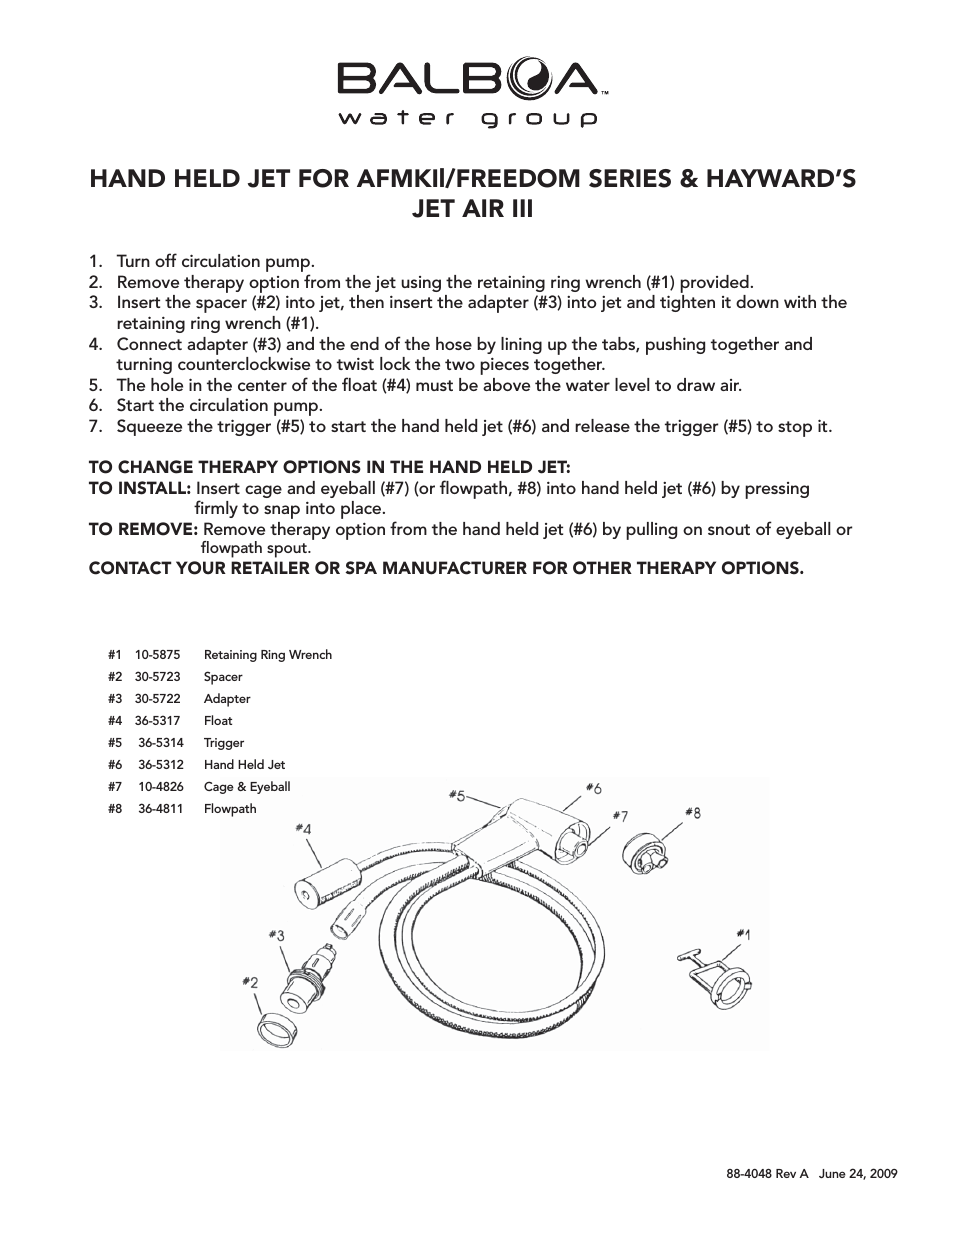 Hand Held Jet For AFMKII-Freedom Series & Hayward's Jet Air III